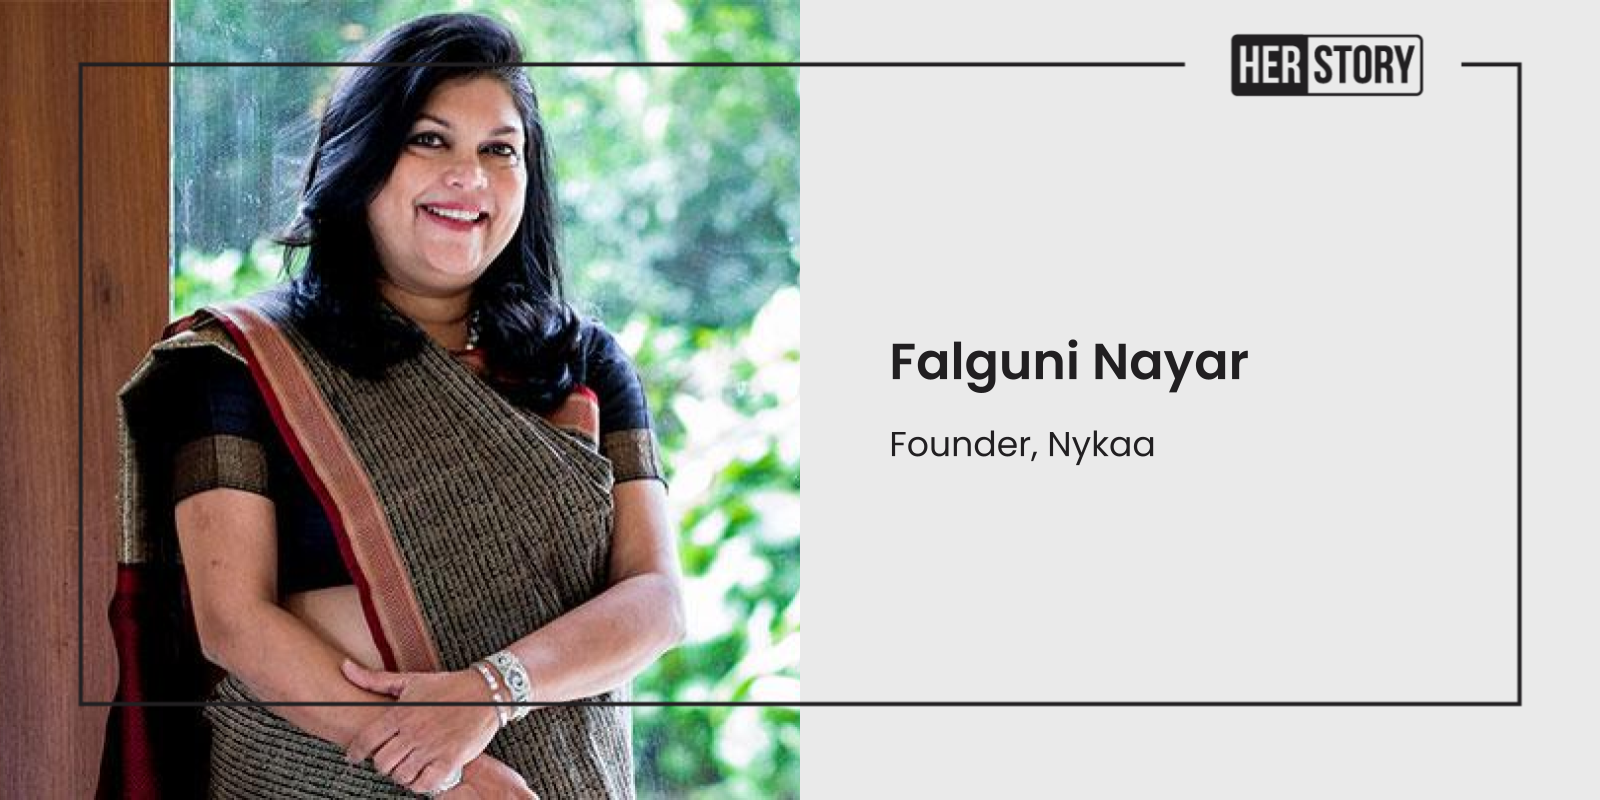 Nykaa founder Falguni Nayar becomes India's newest self-made billionaire 
